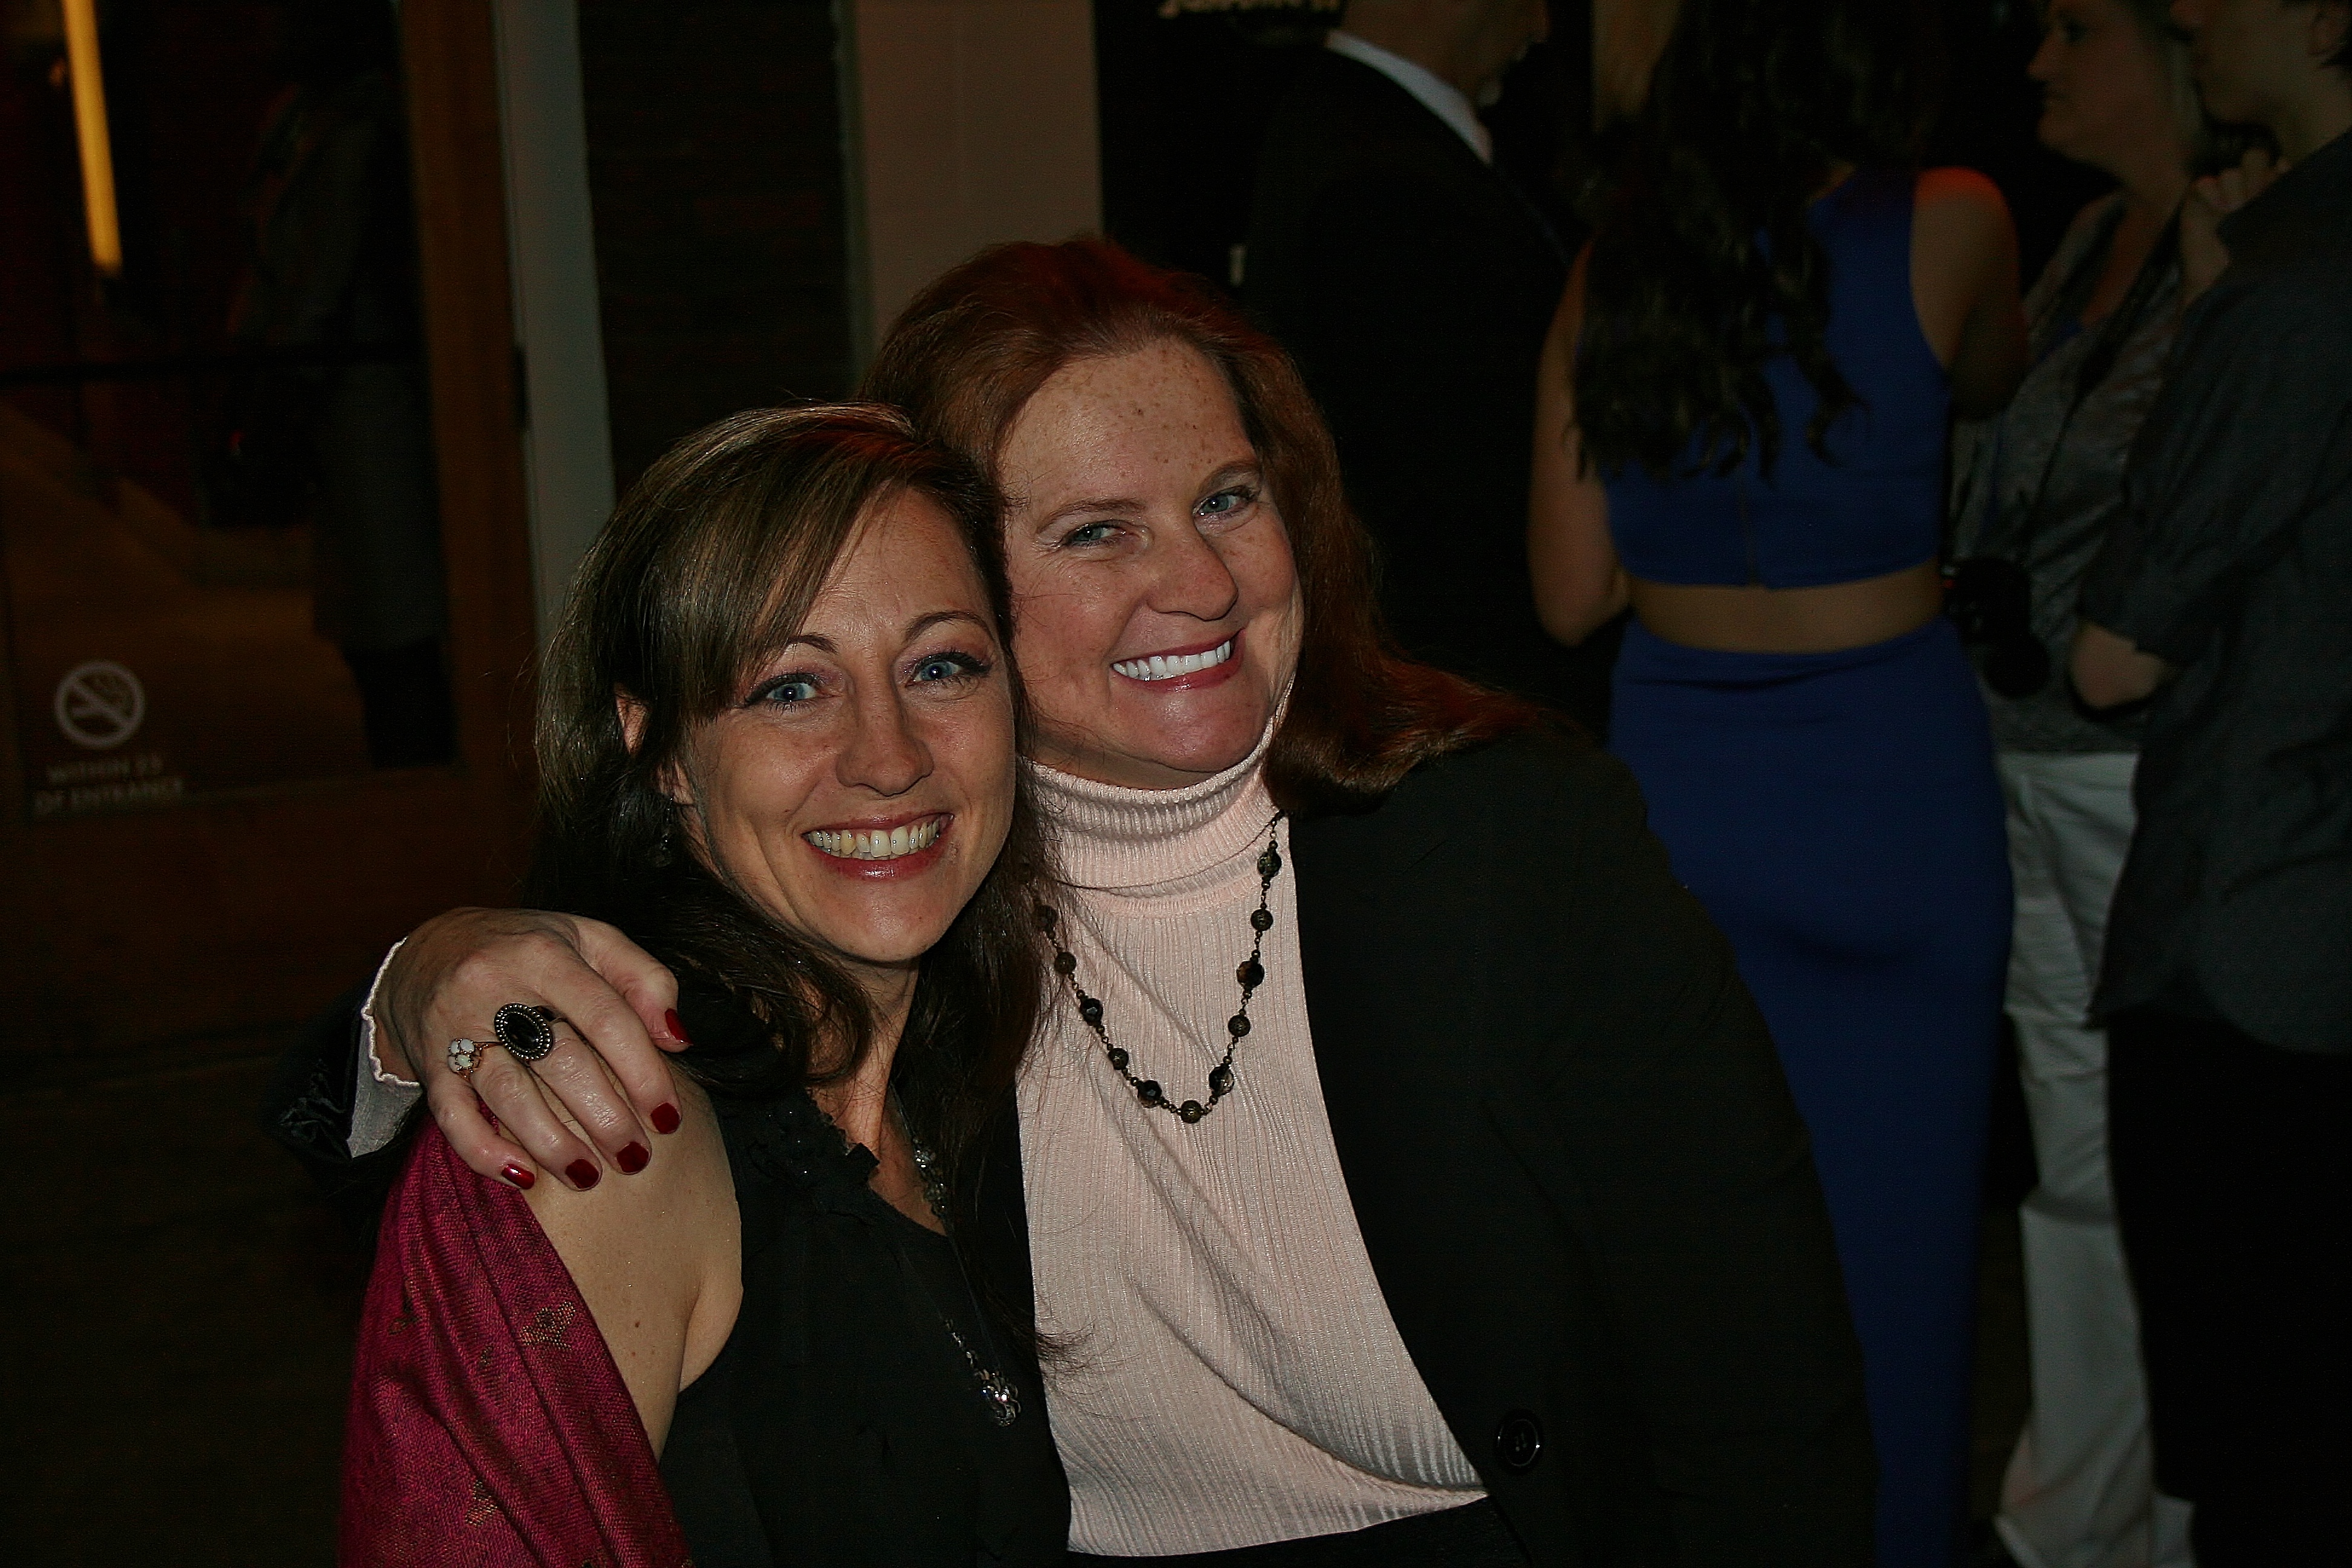 Juli Tapken and Brenda Jo at the Red Carpet Event for Providence, Franklin, TN